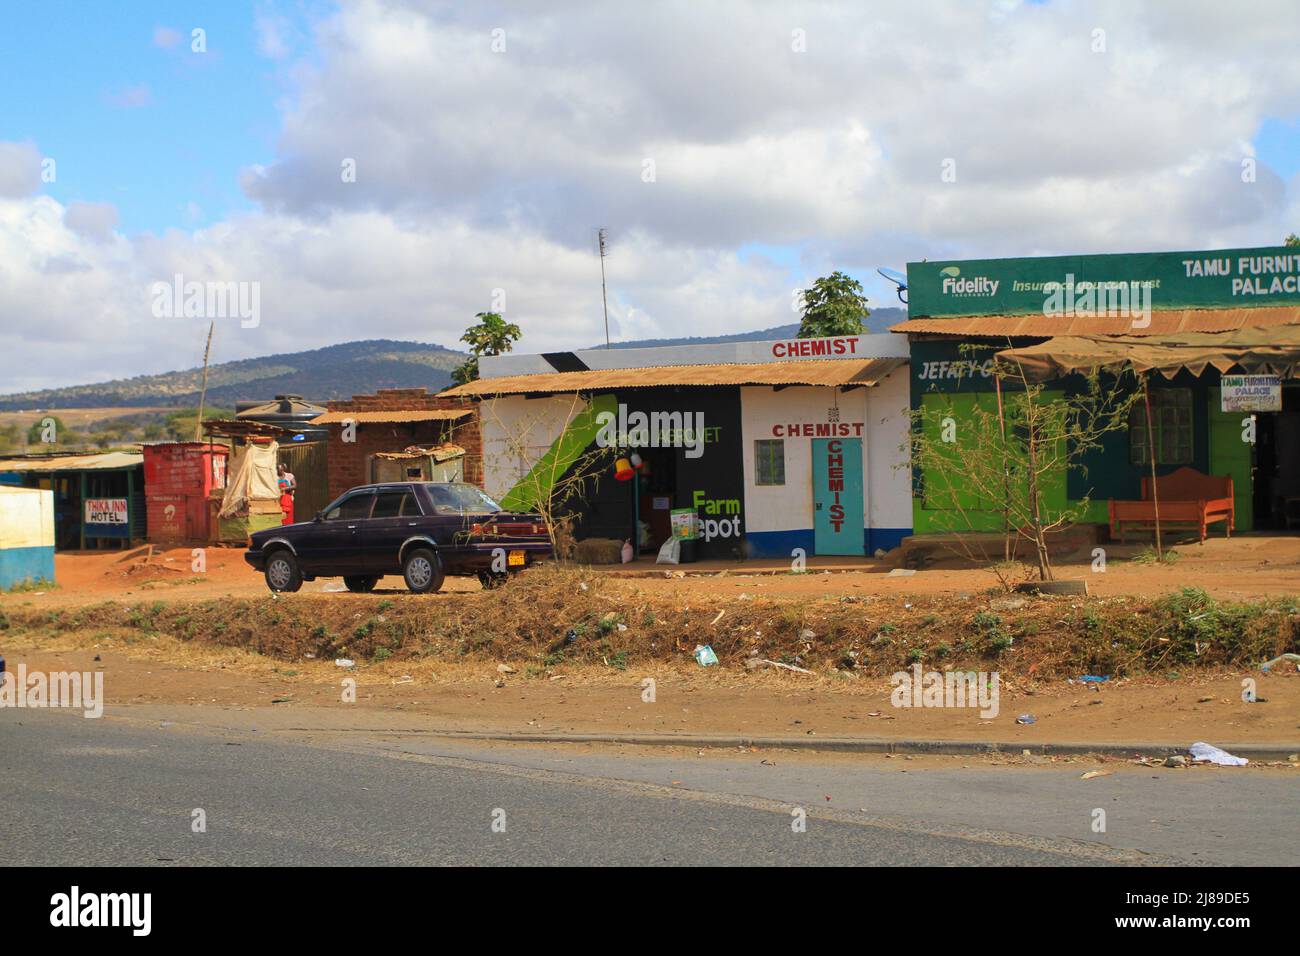 Chemist shop or pharmacy among small shops in Kenyan village. Kenya Stock Photo